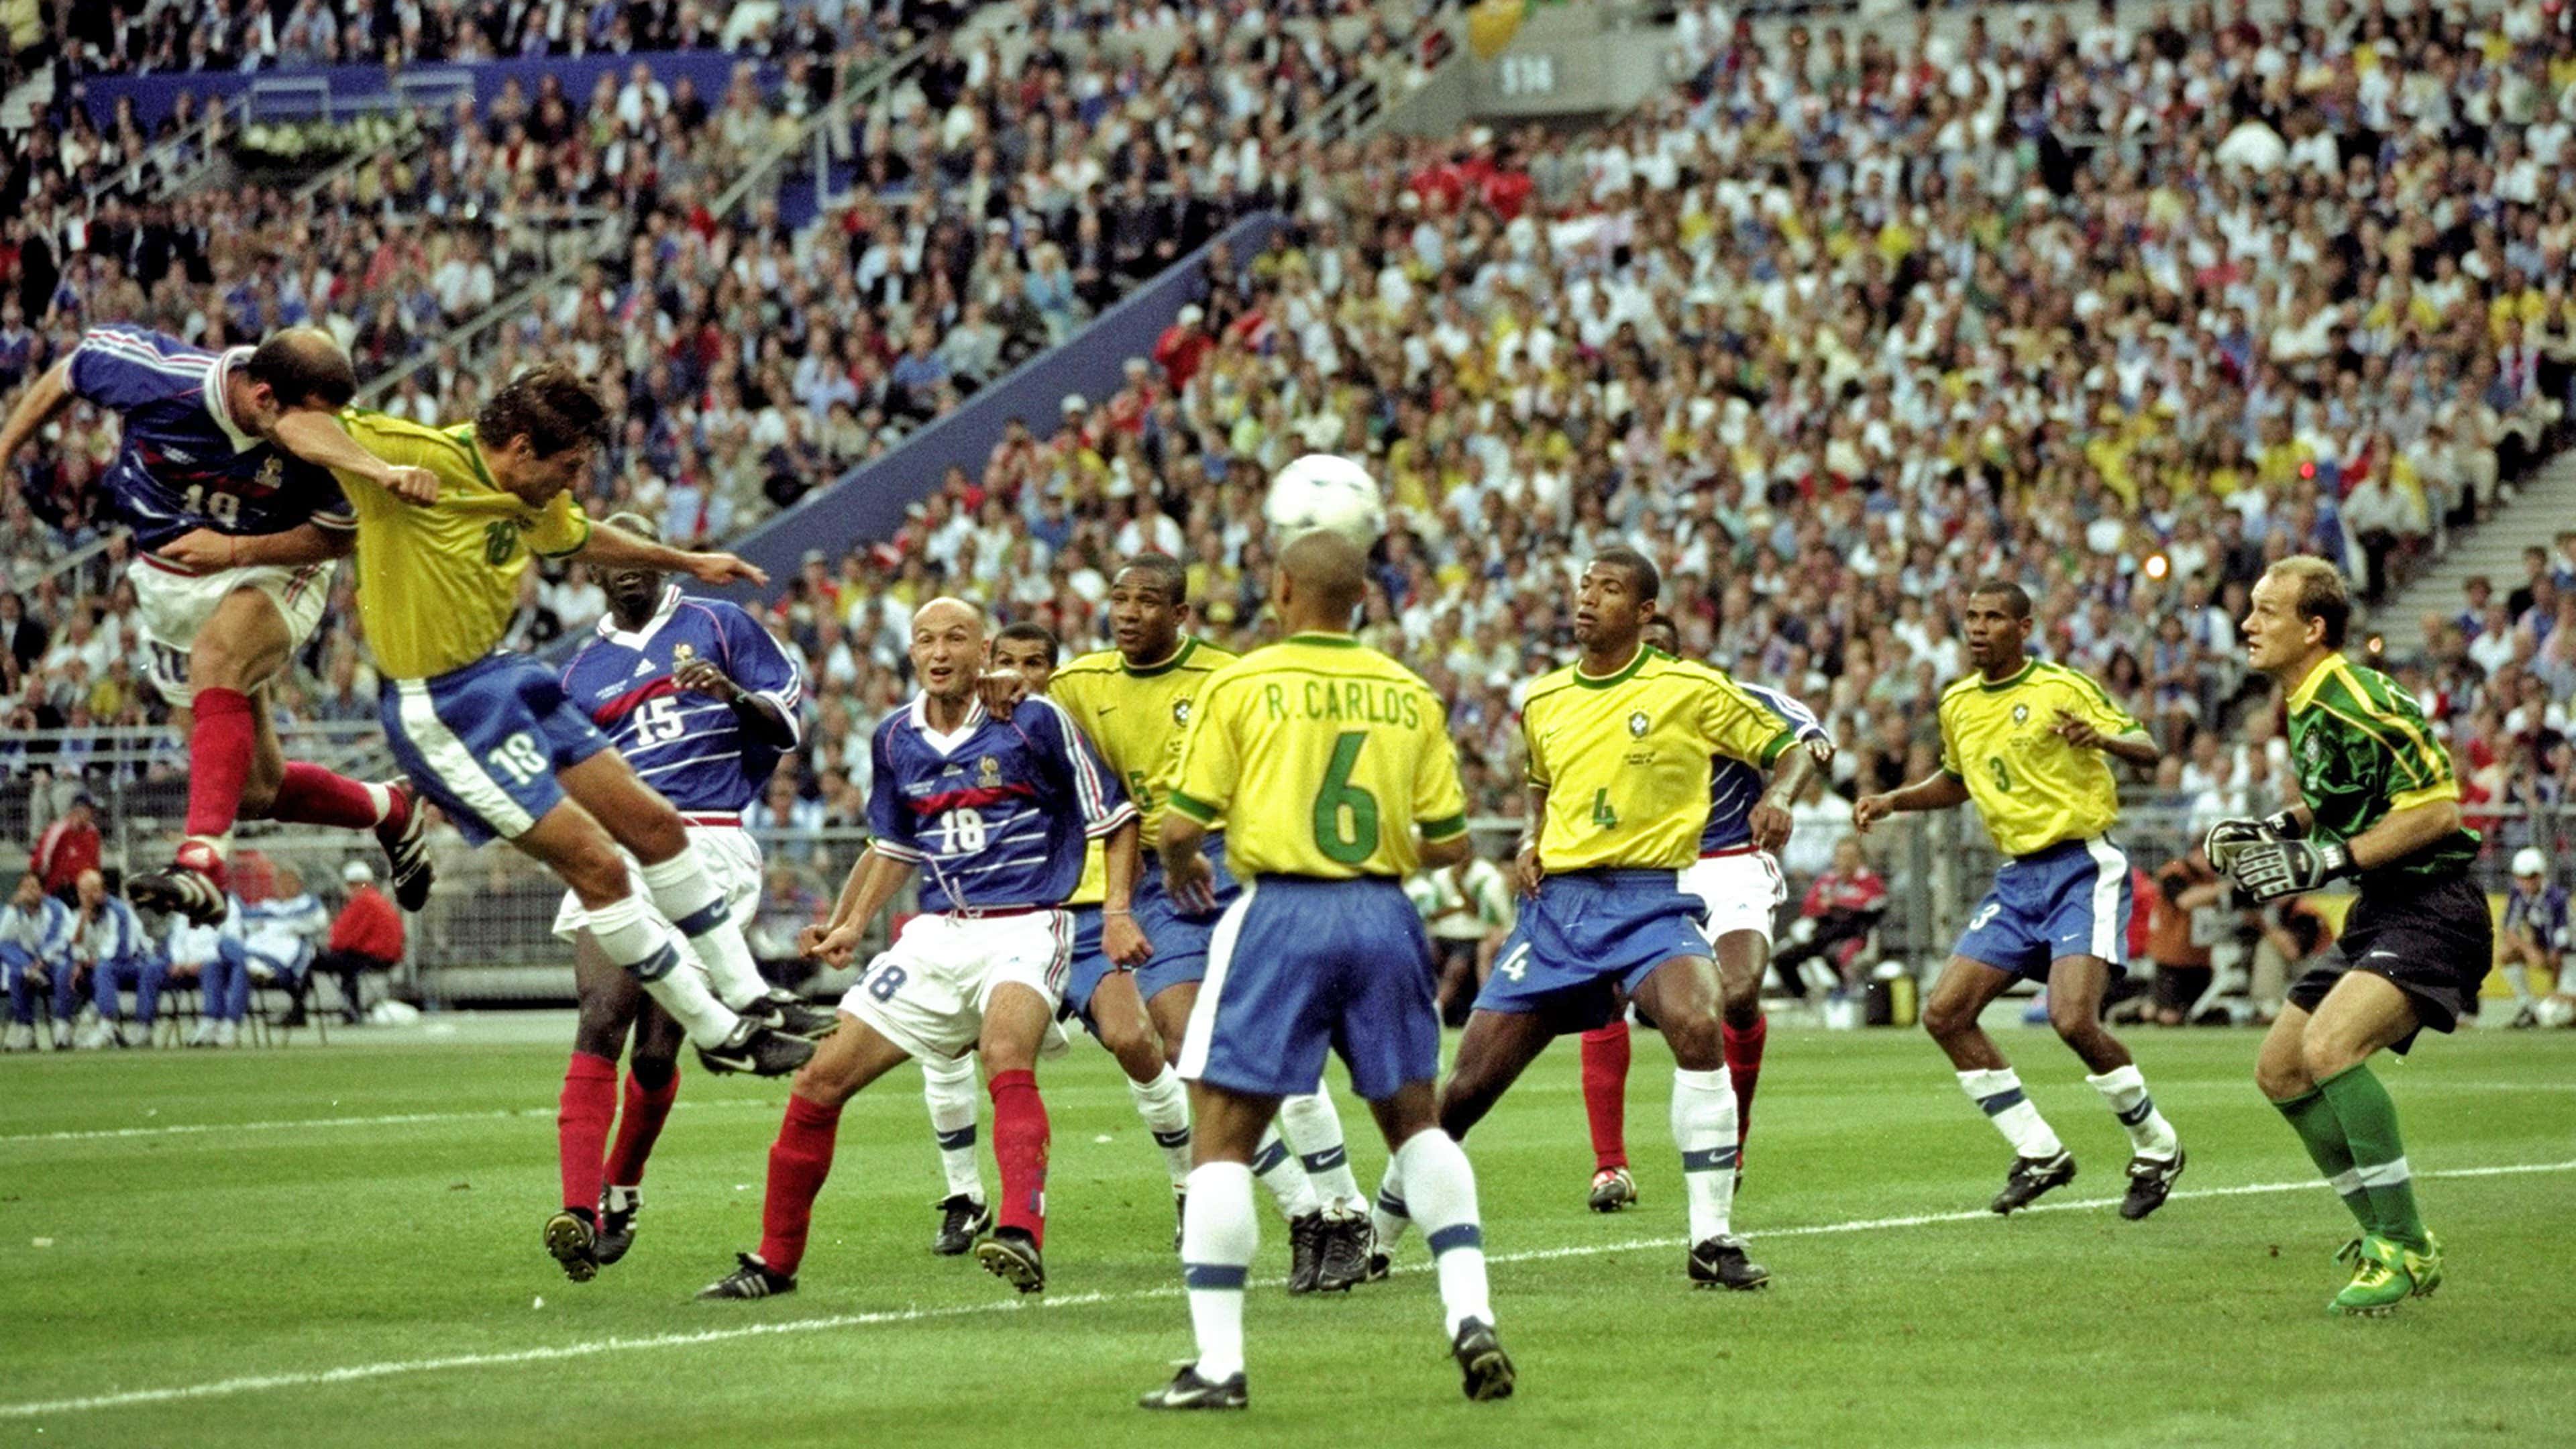 1998 World Cup final: France – Brazil 3:0